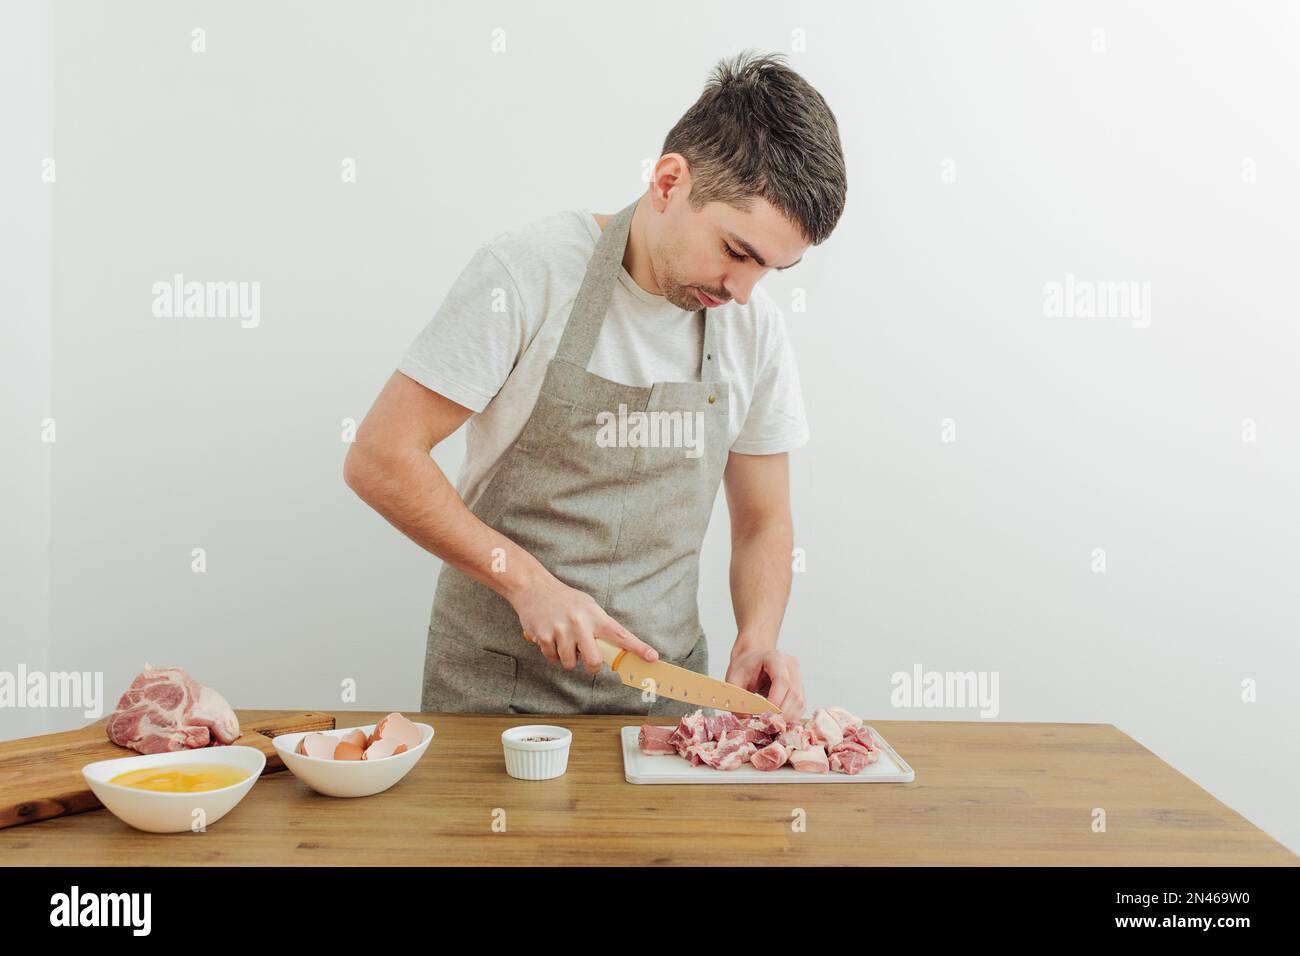 https://c8.alamy.com/comp/2N469W0/man-cutting-meat-with-a-knife-on-a-cutting-board-wooden-table-fresh-pork-meat-2N469W0.jpg